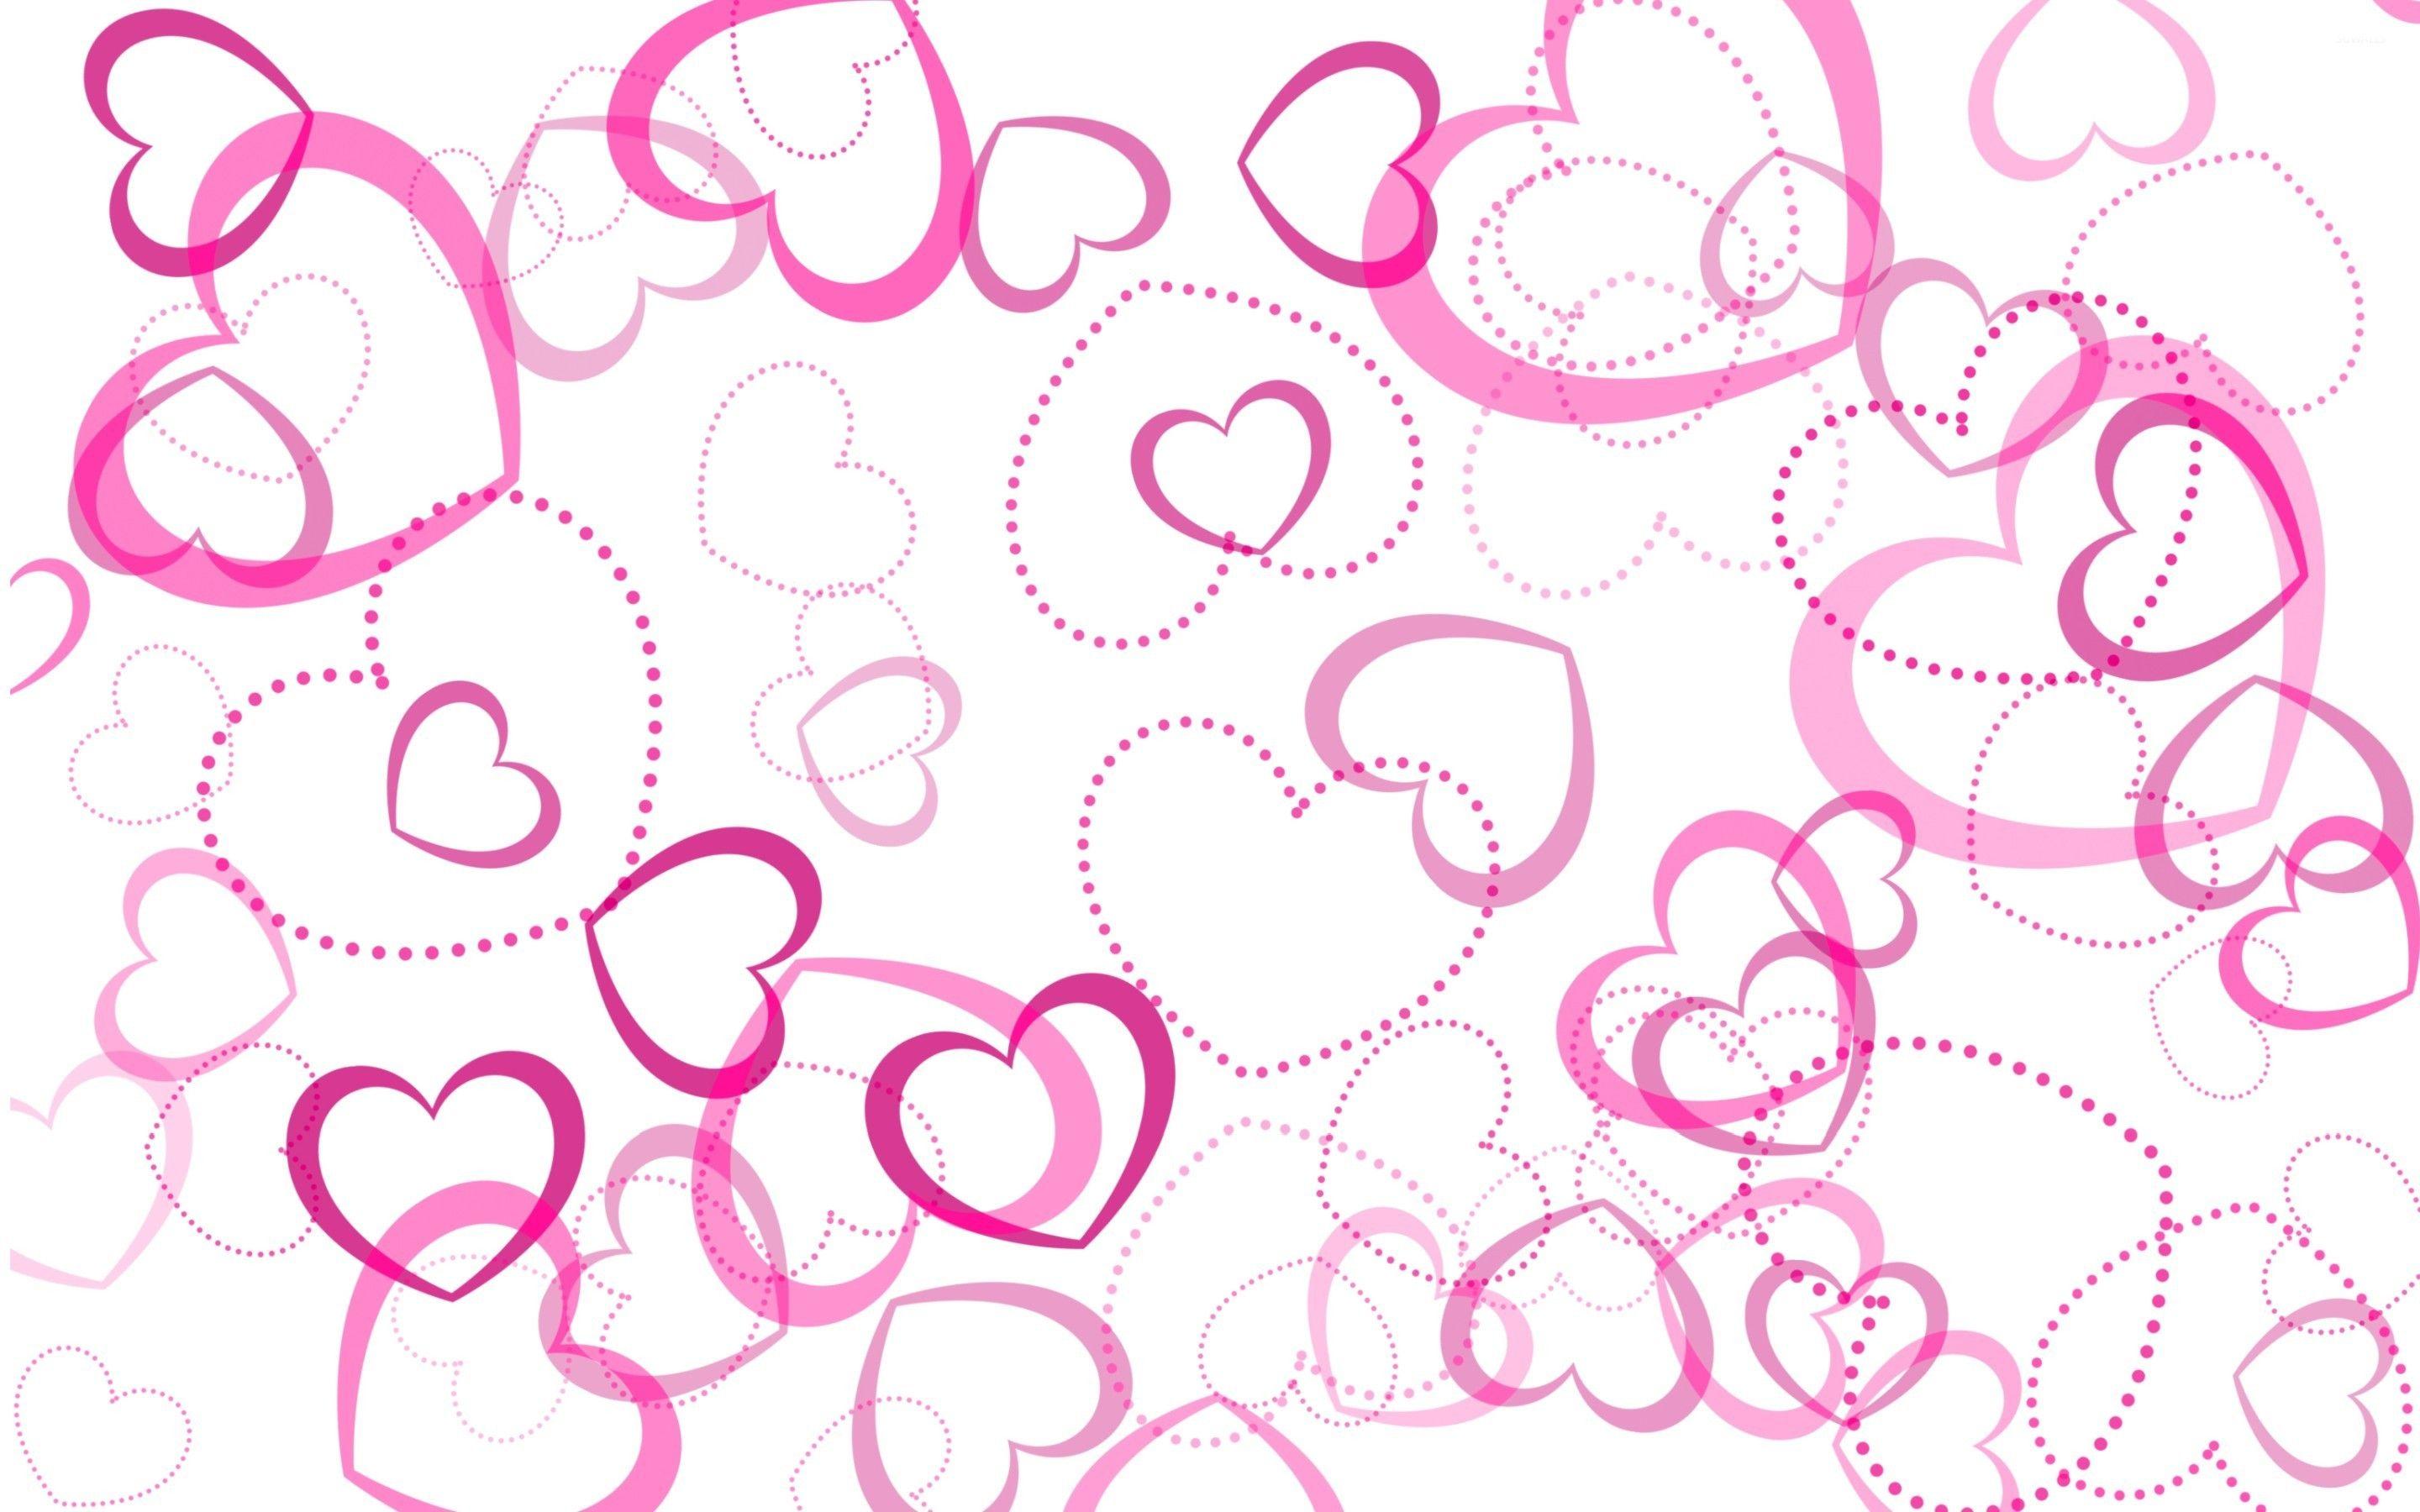 Love Couple Hearts wallpaper (Desktop, Phone, Tablet)